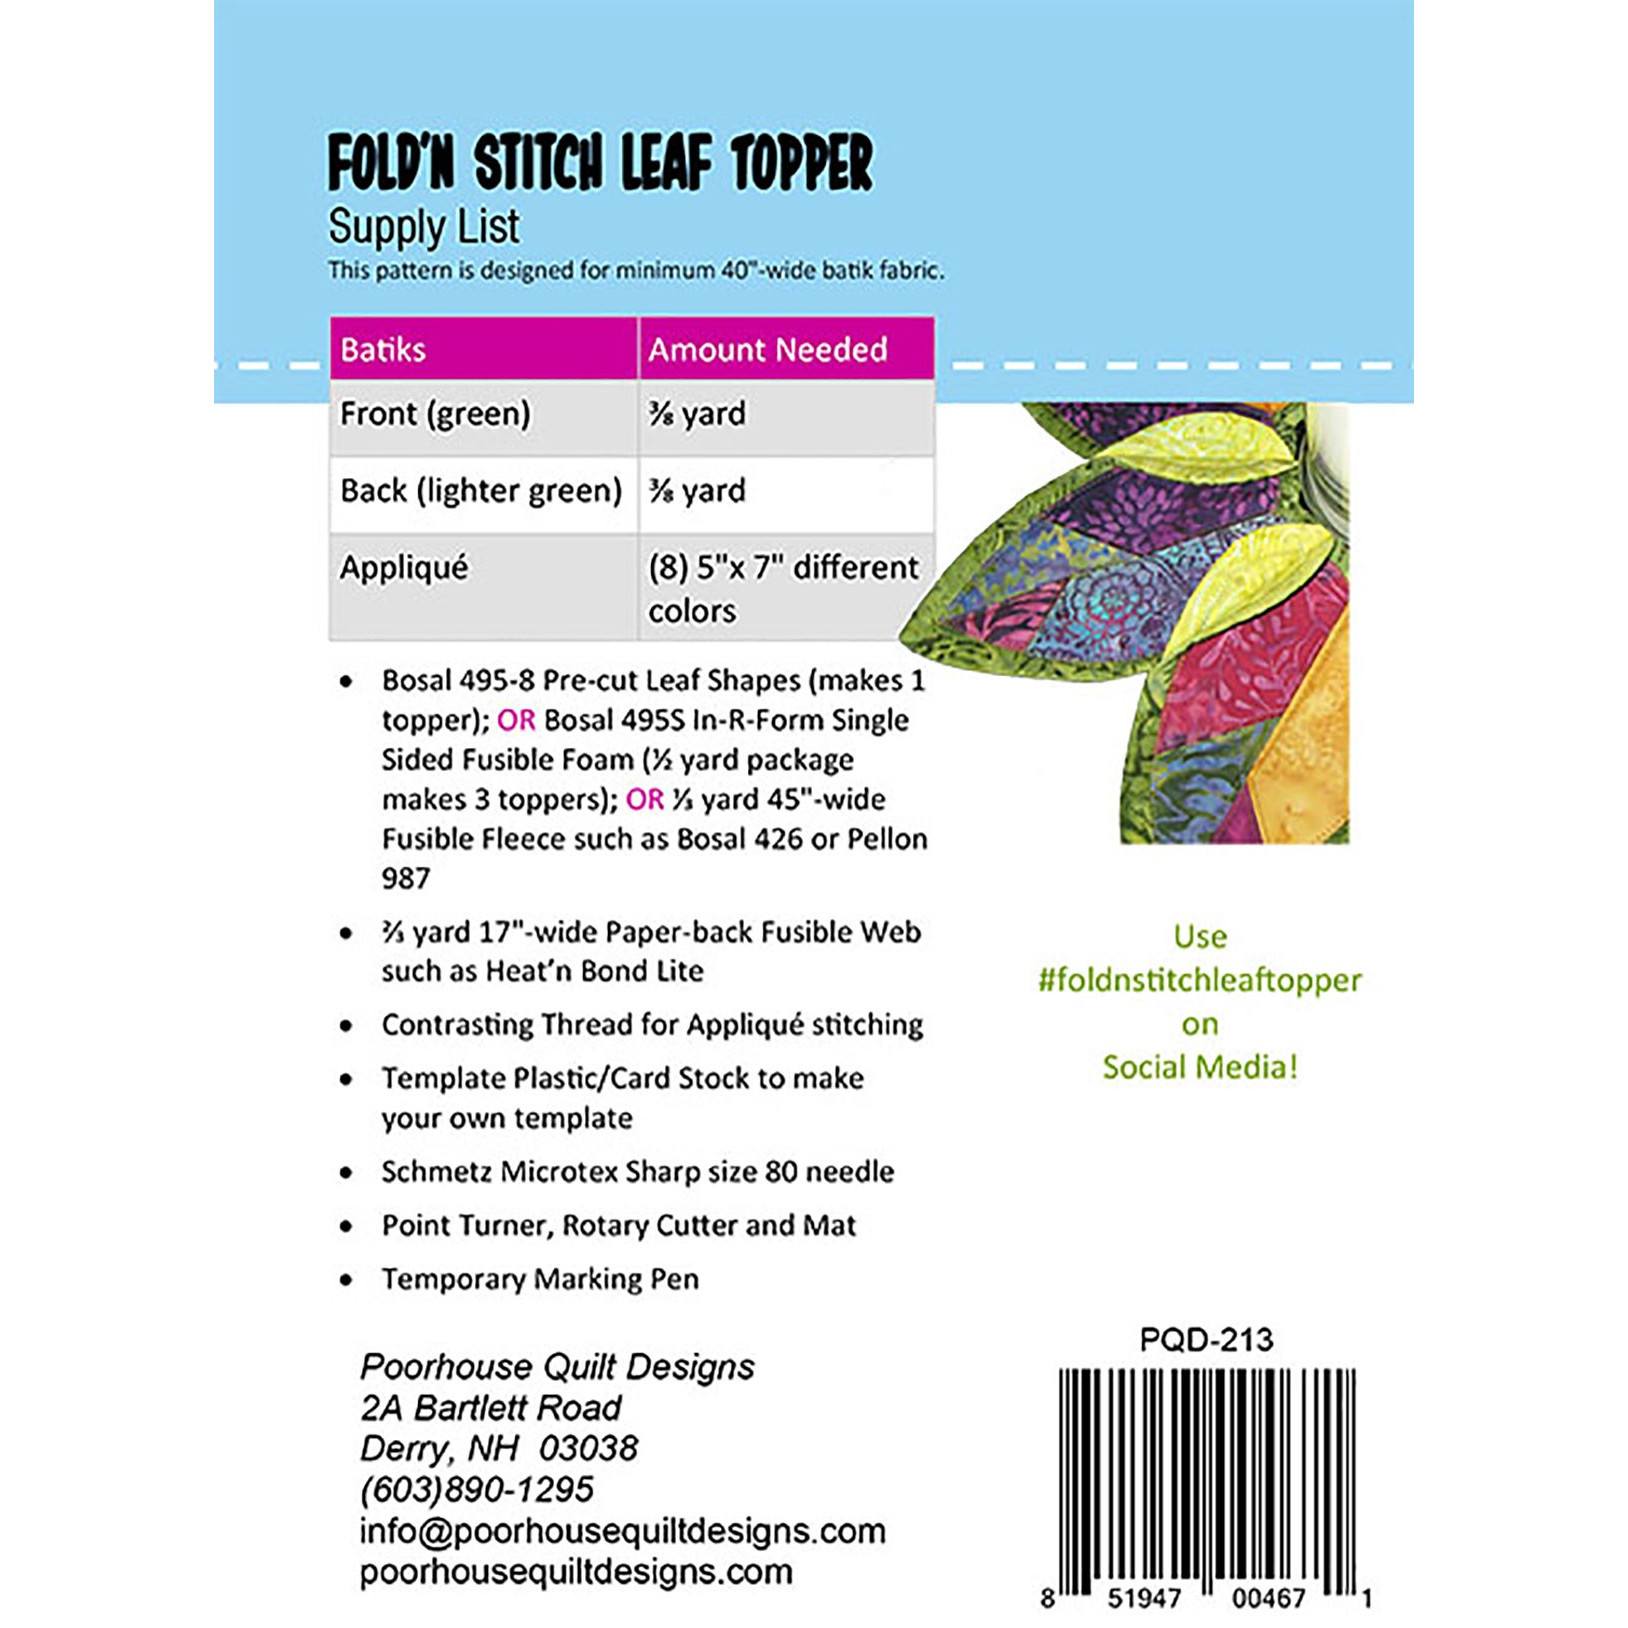 Fold-n-Stitch Leaf Topper Pattern, Poorhouse Quilt Designs image # 35135